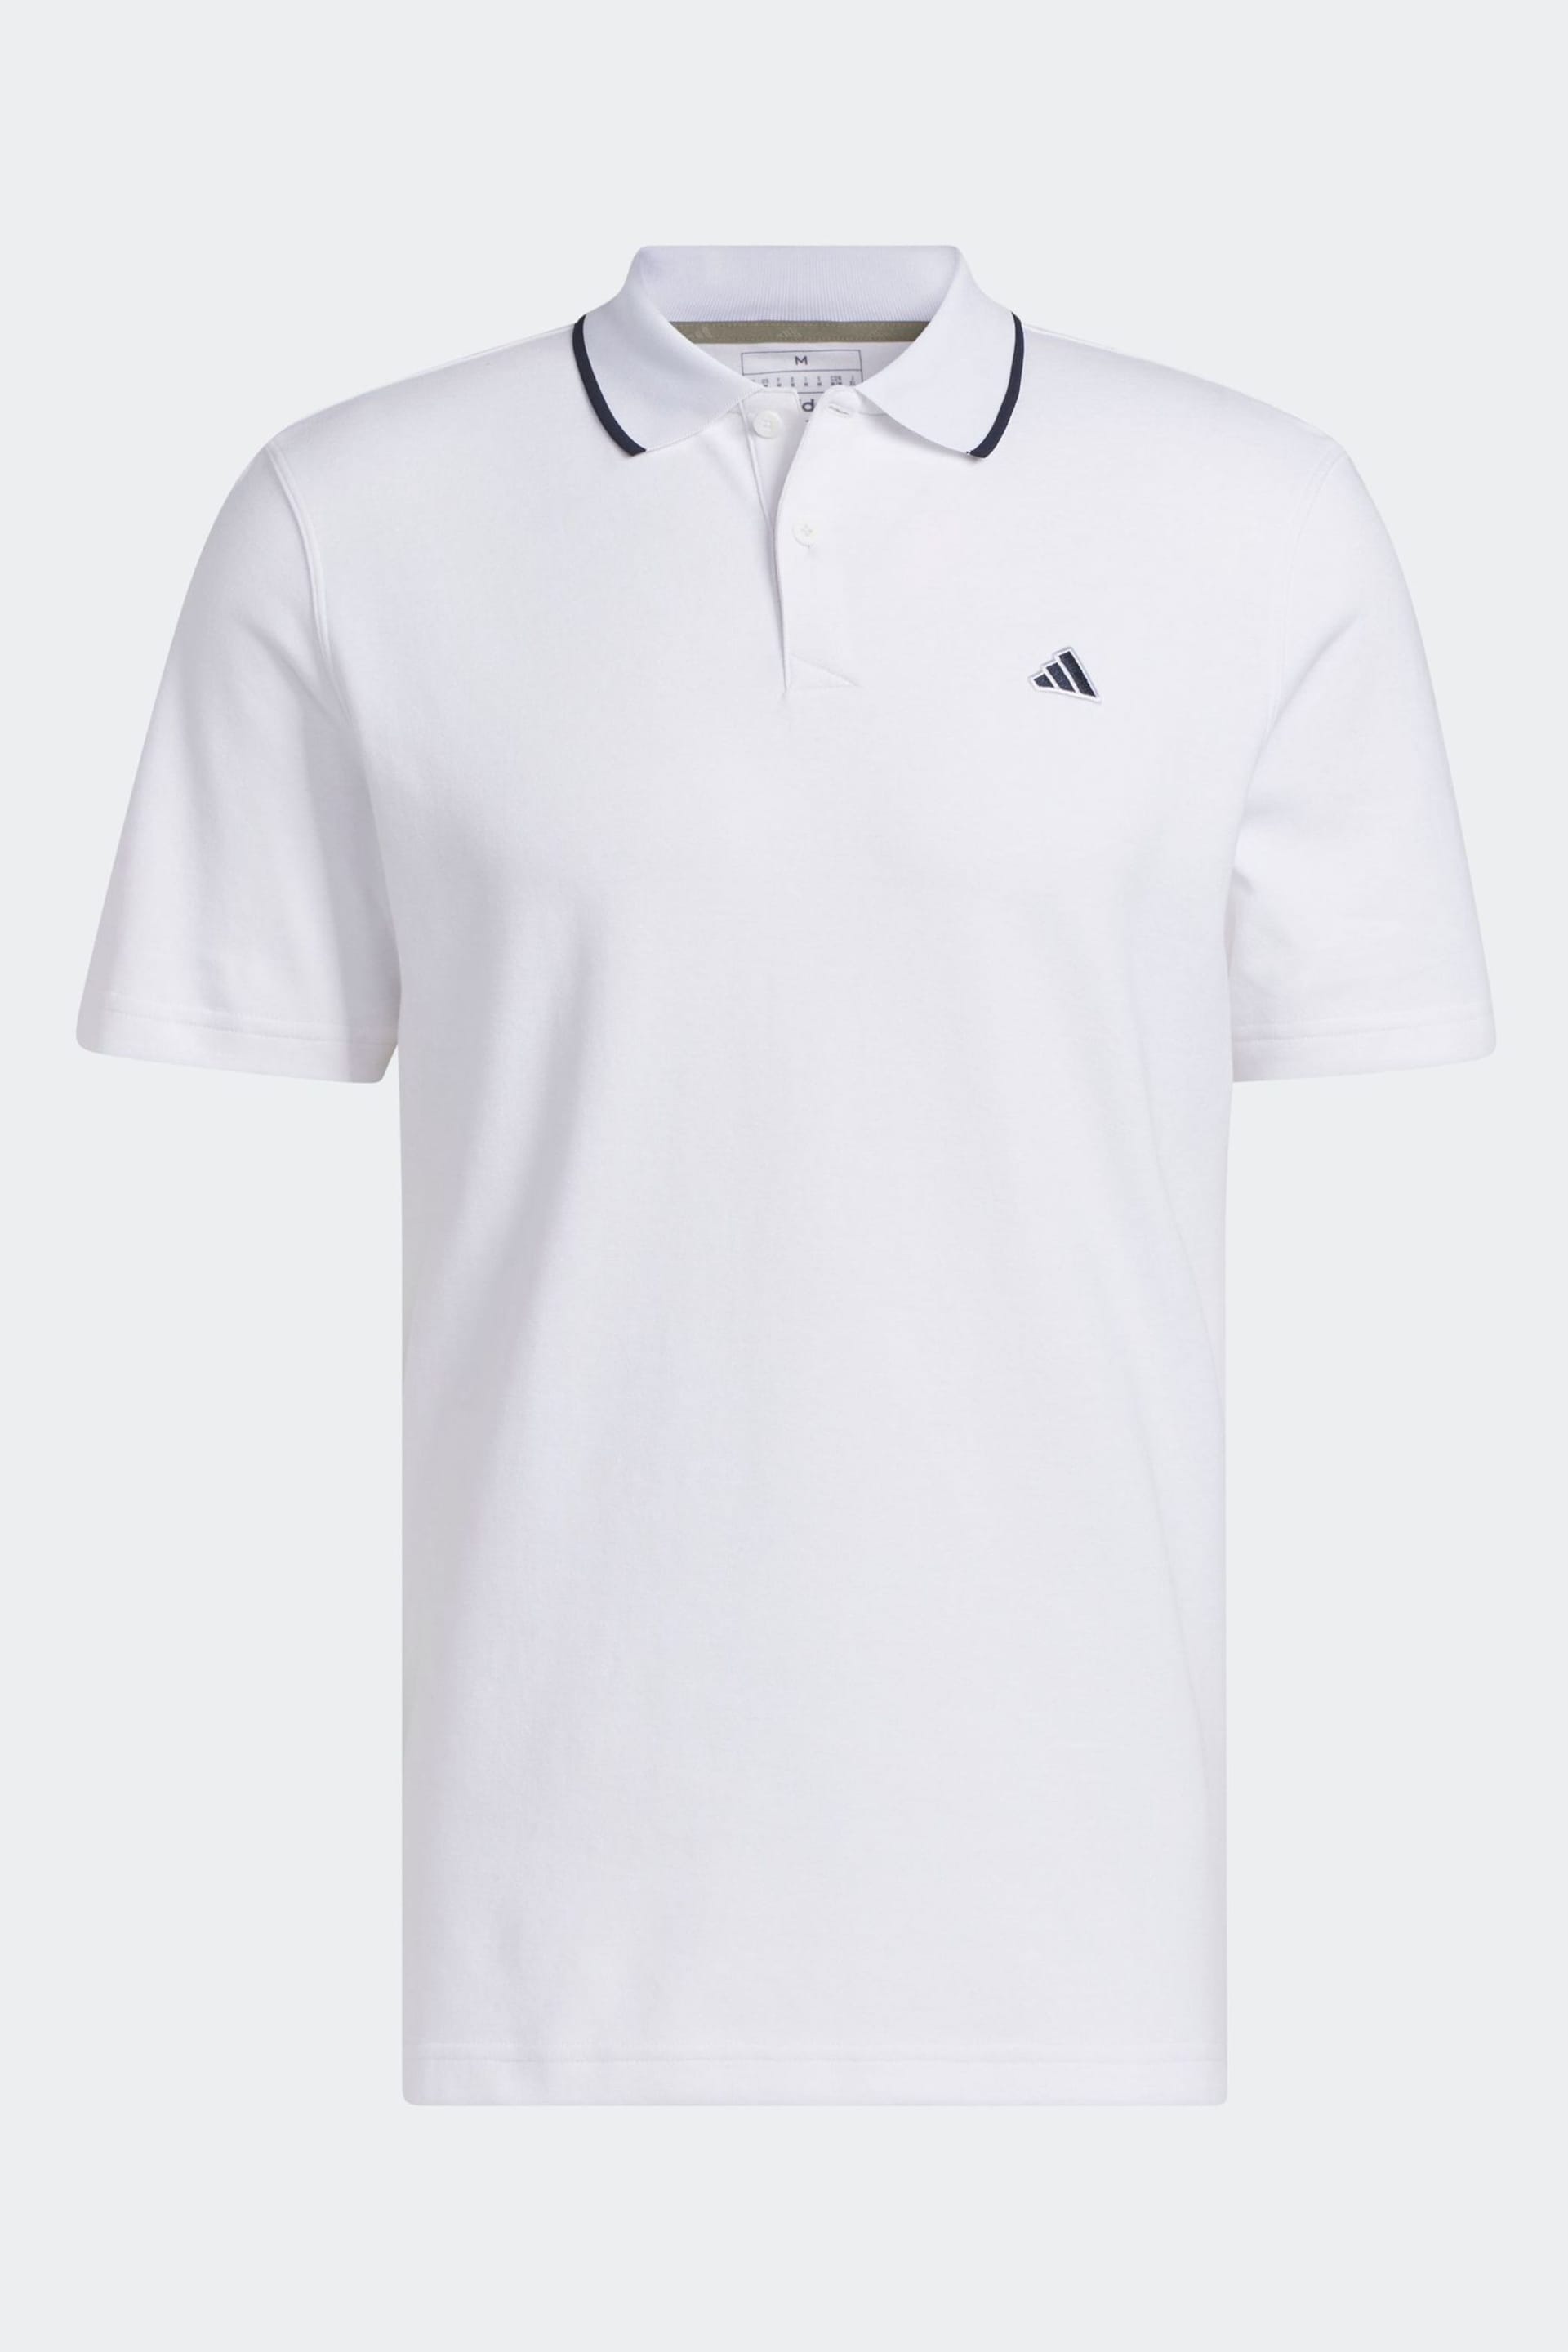 Performance Go-To Piqué Golf Polo Shirt - Image 1 of 1